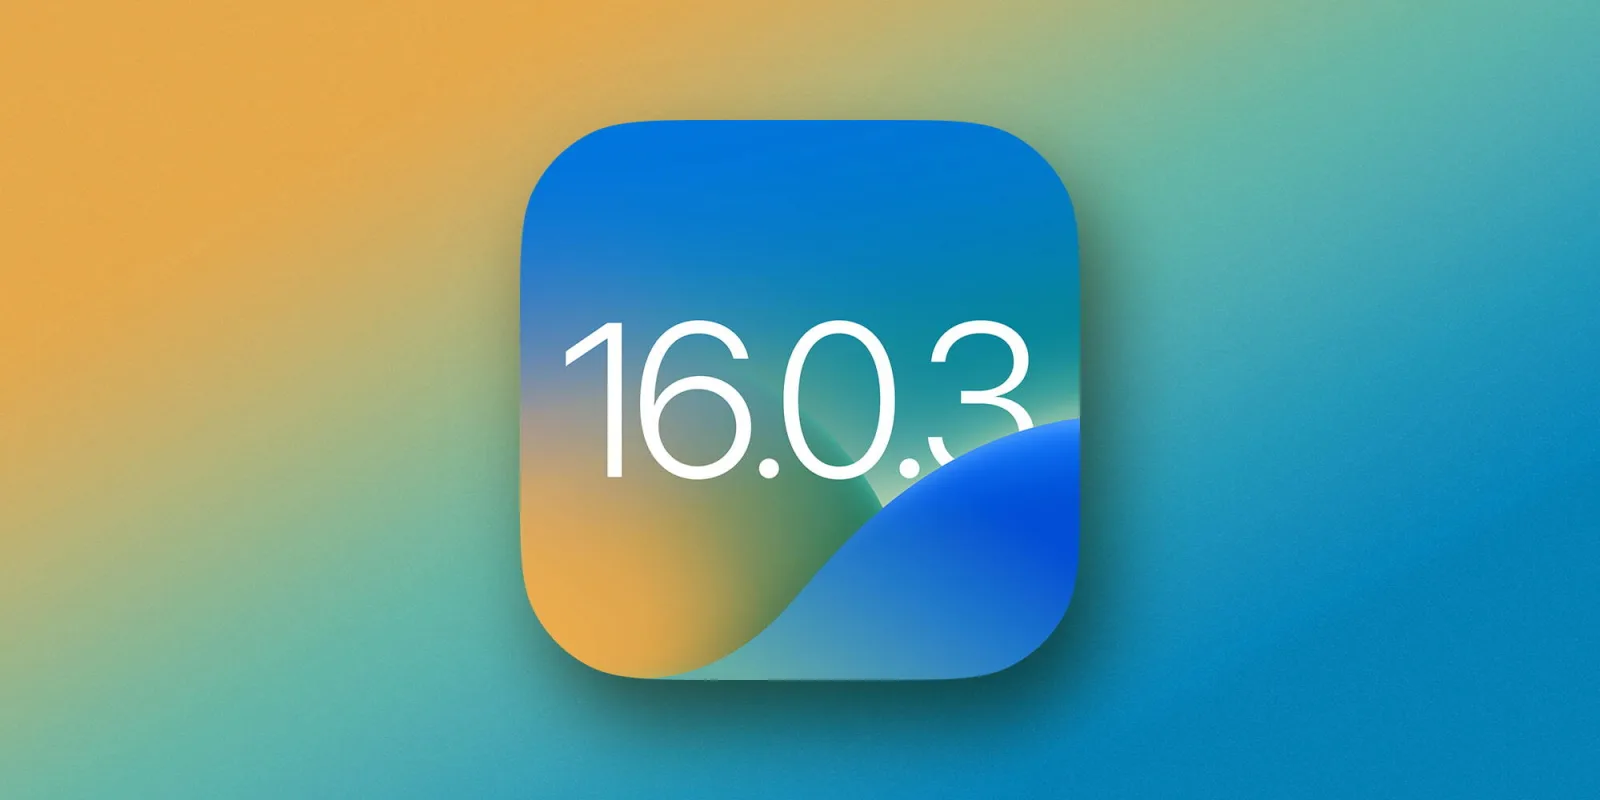 iOS 16.0.3 Should I Update